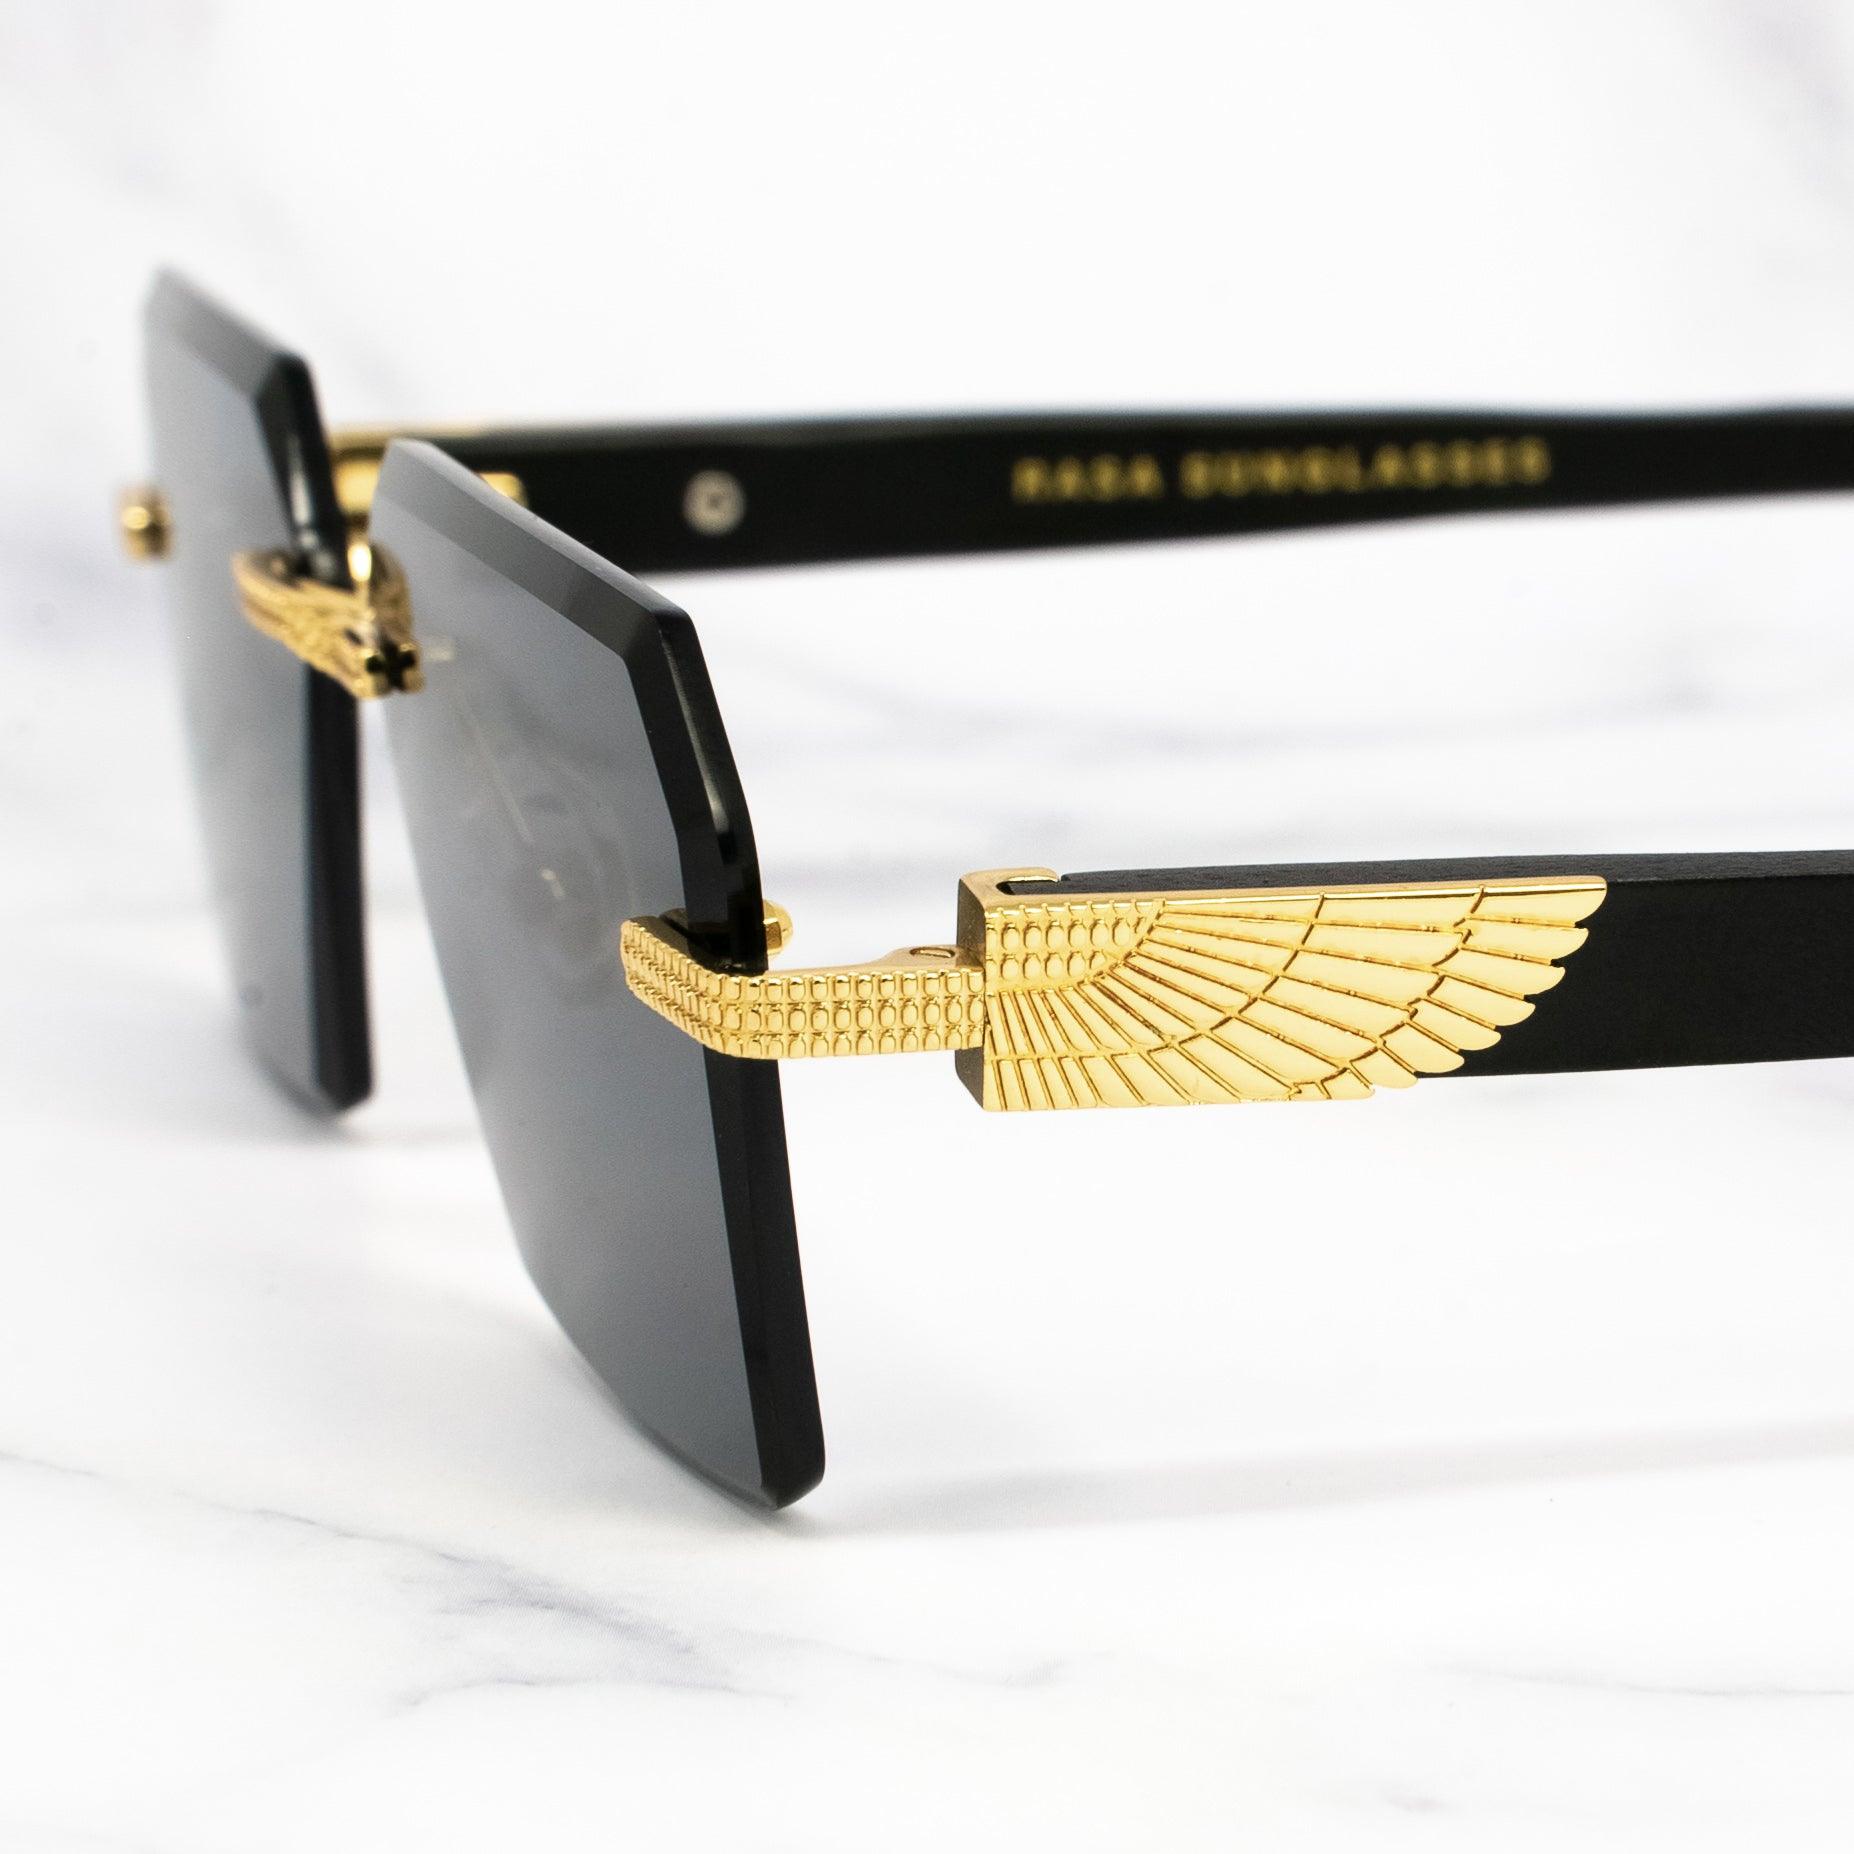 THE CANARSIE - BLACK GOLD - Rasa Sunglasses